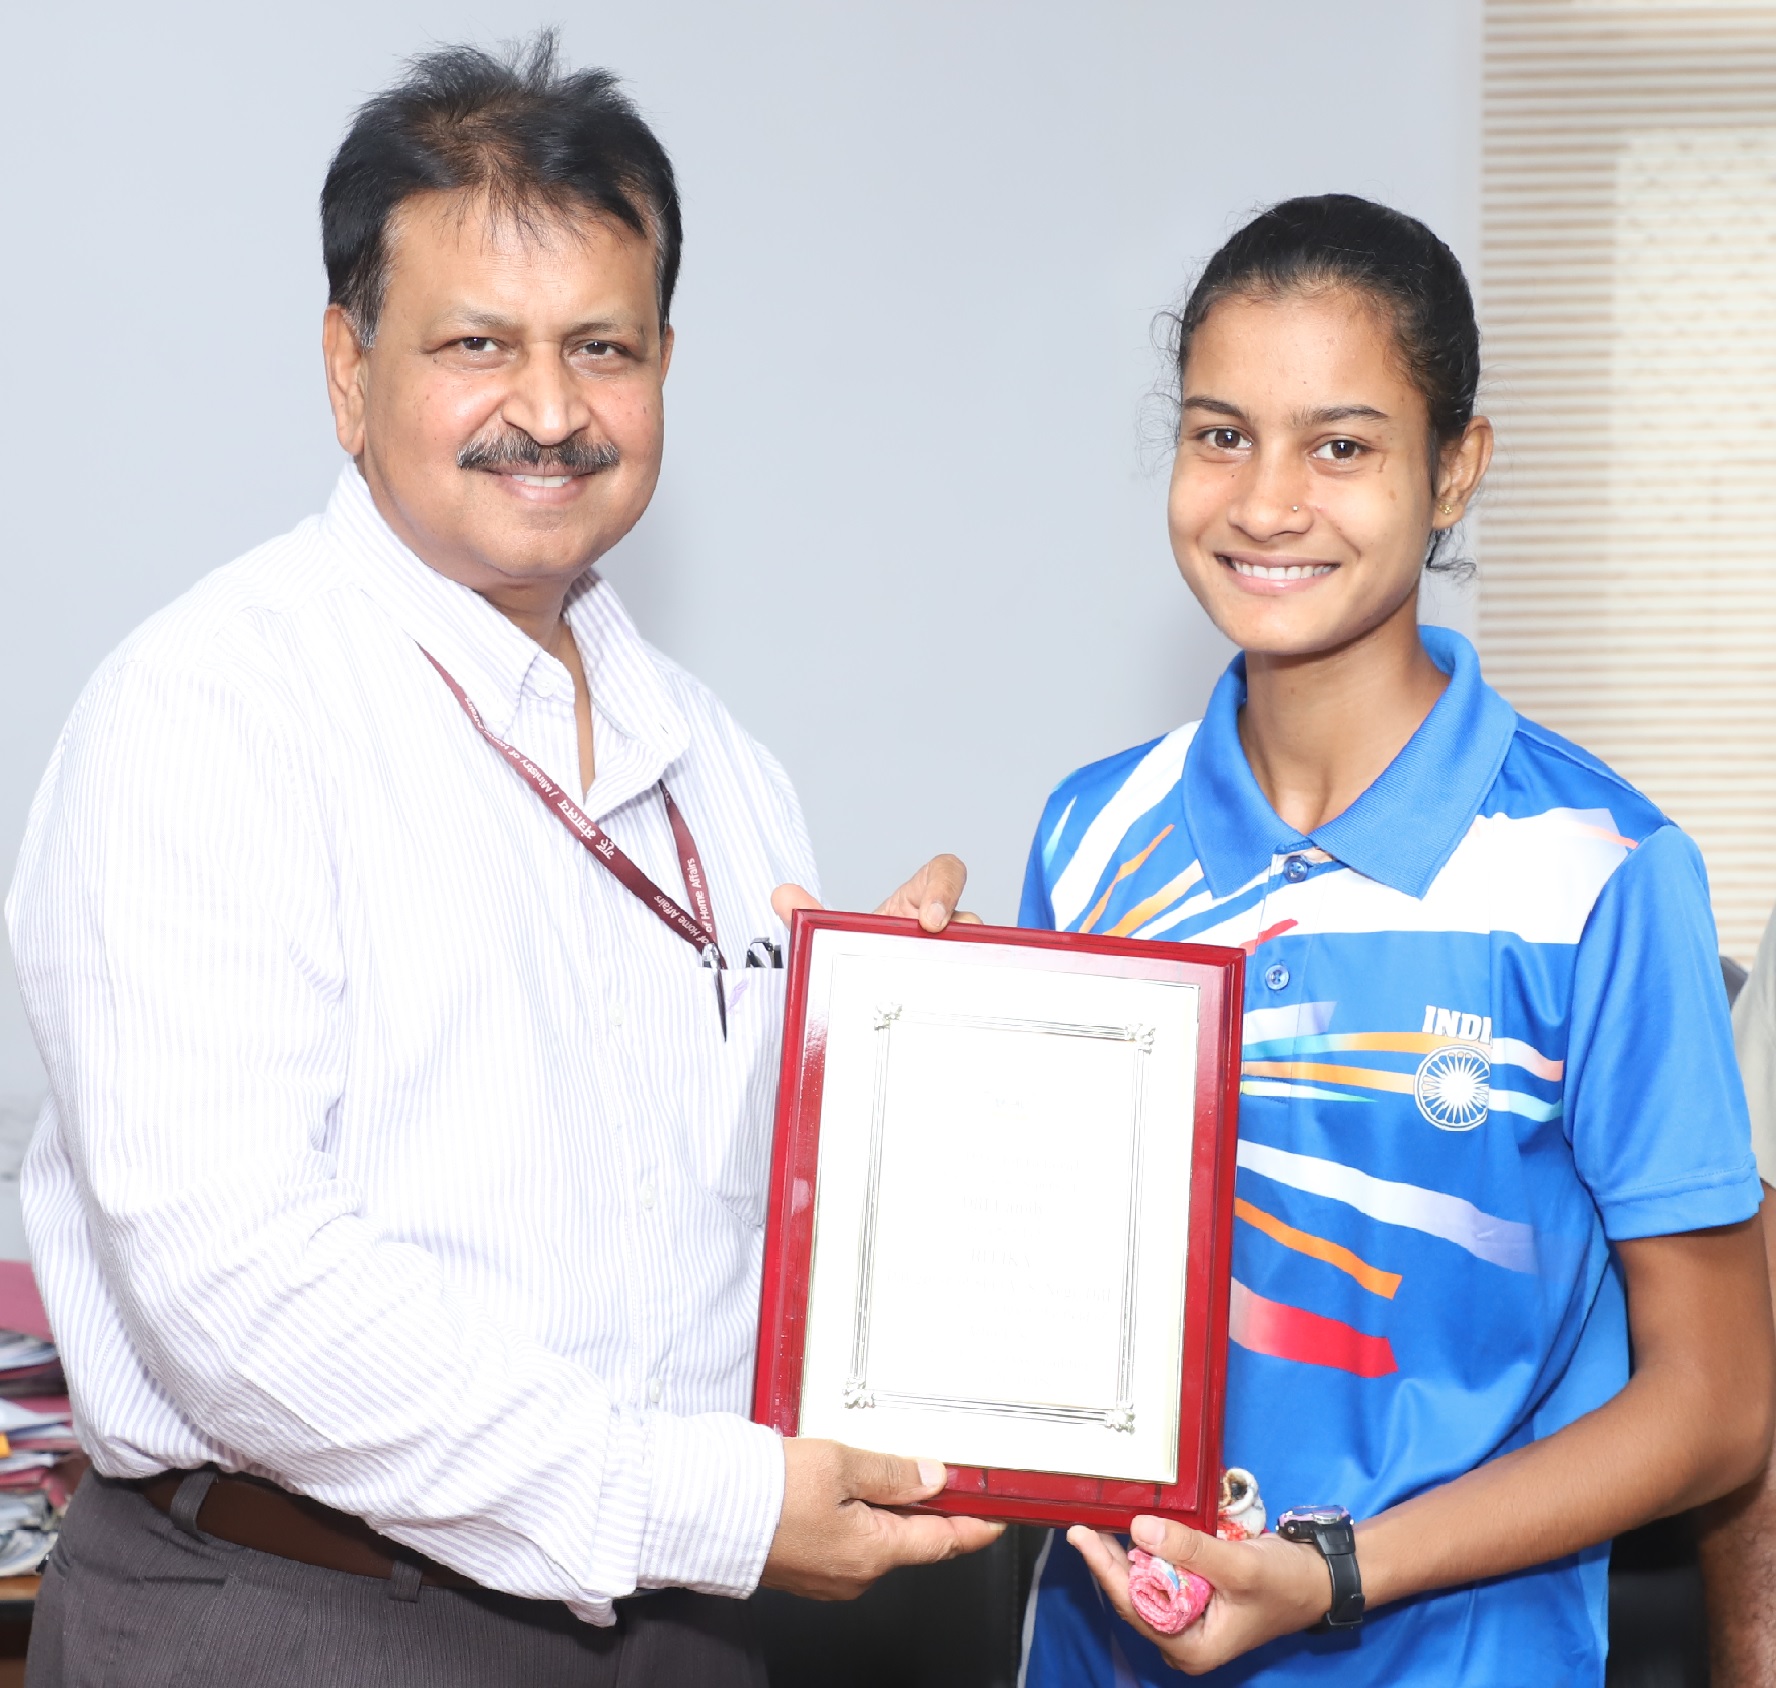 DGRI felicitates Ms. Ritika Daughter of Shri V.S. Negi  DRI for her achievement in 4x400 m Relay in IAAF World U-20 Championship held in Finland.